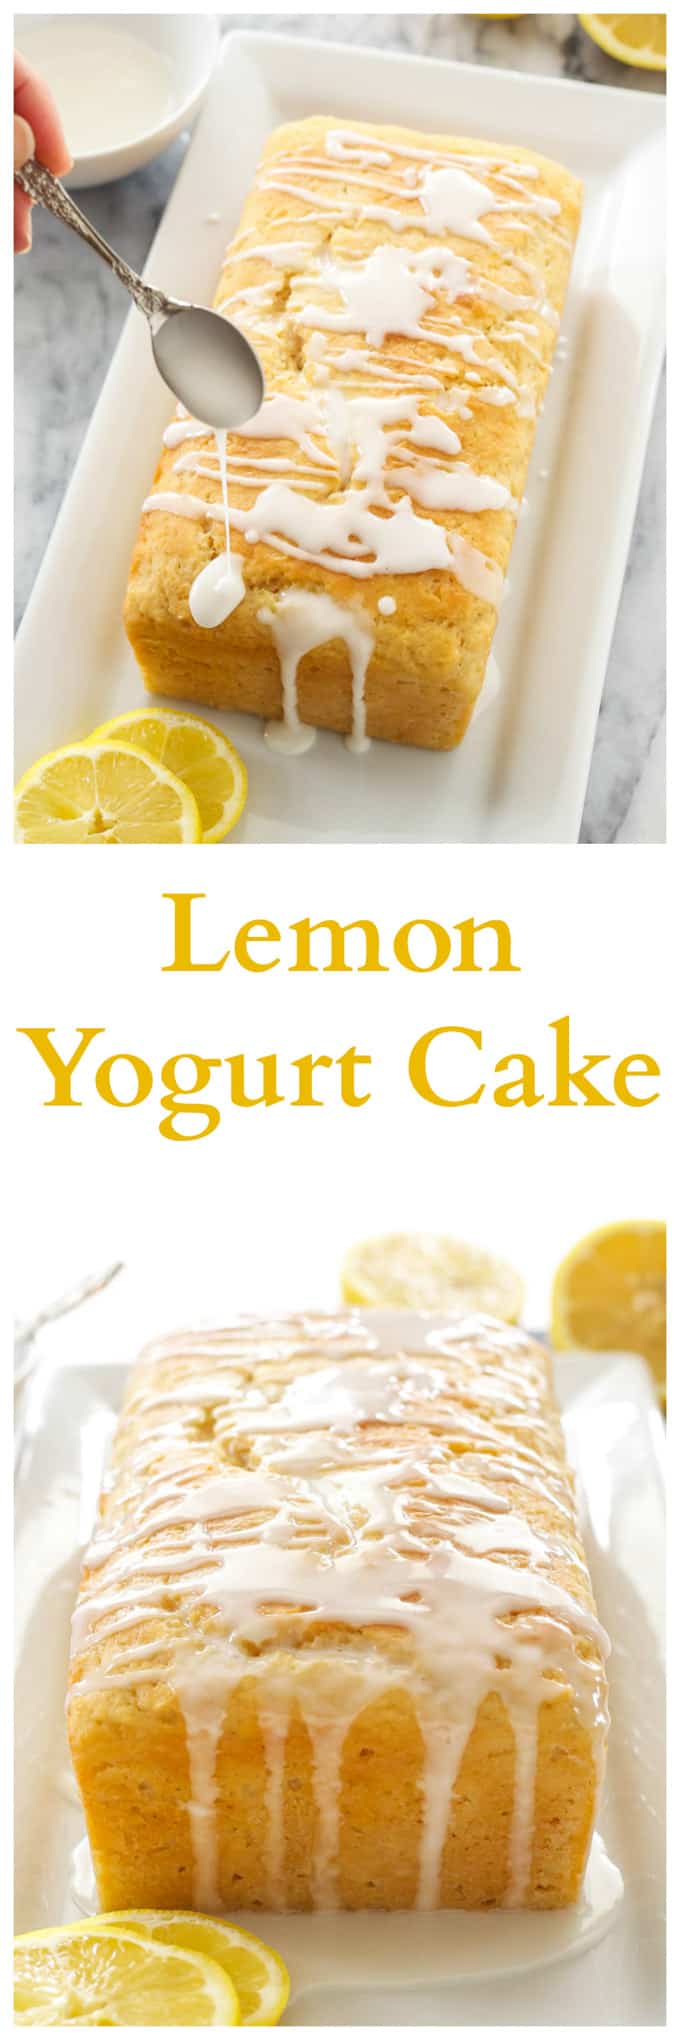 Lemon Yogurt Cake | A moist lemon loaf cake made healthier thanks to Greek yogurt!  via @reciperunner